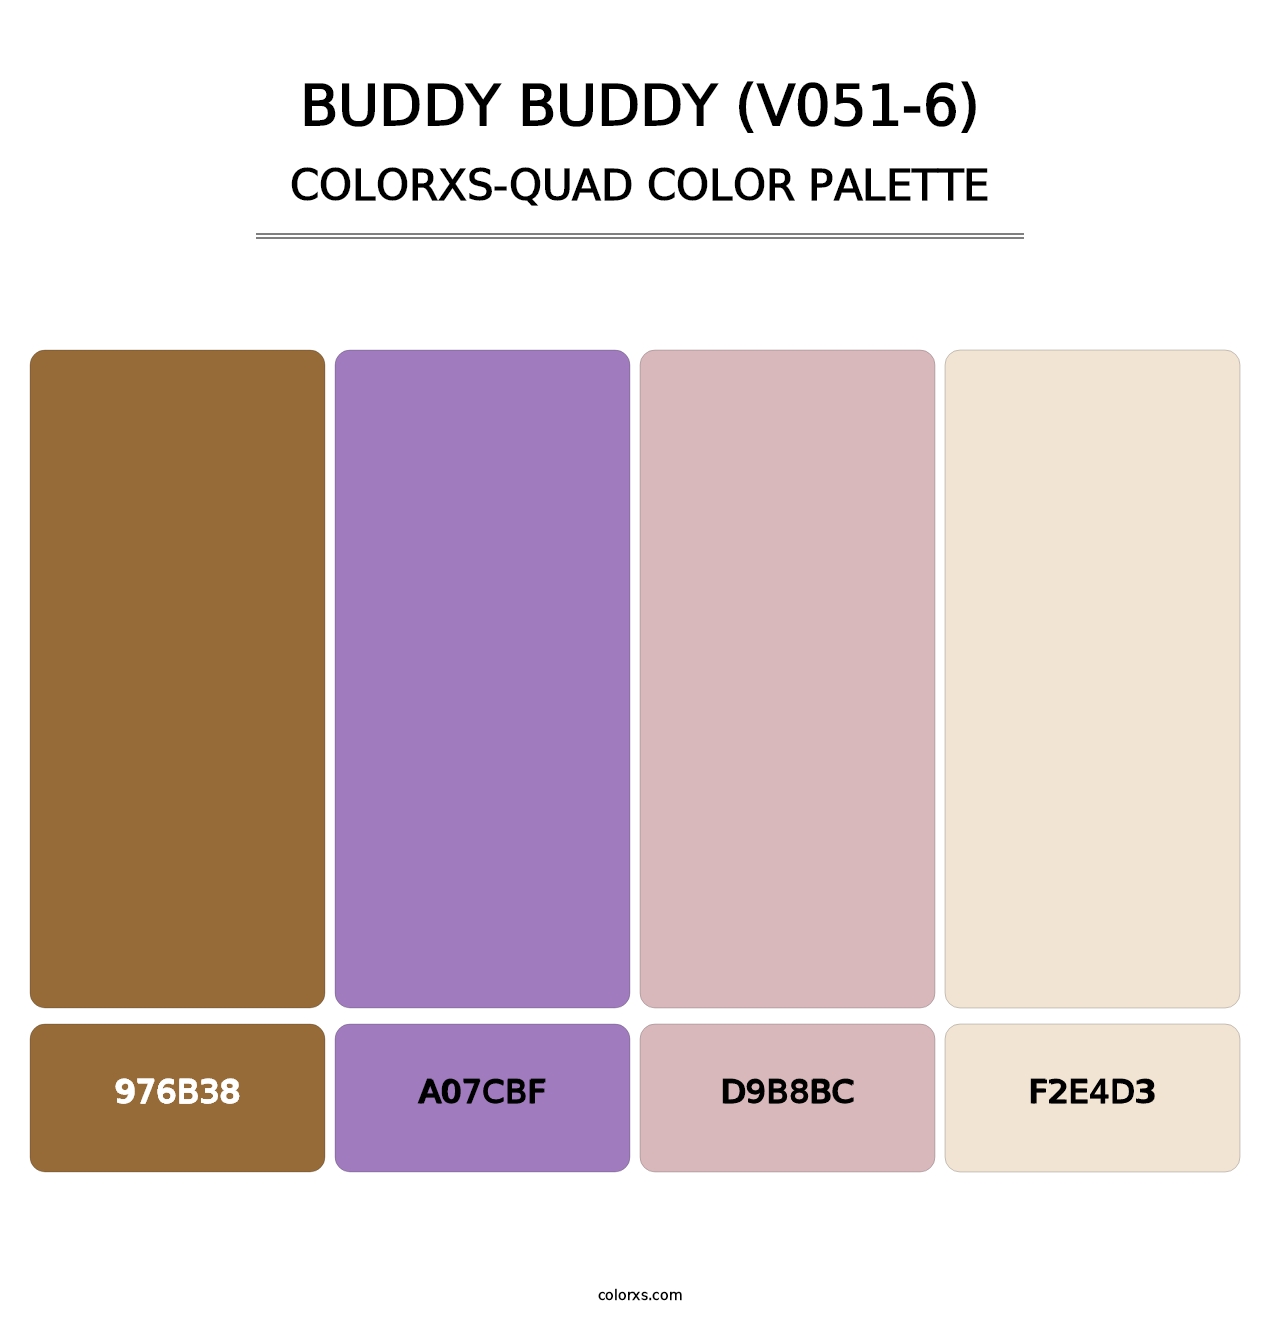 Buddy Buddy (V051-6) - Colorxs Quad Palette